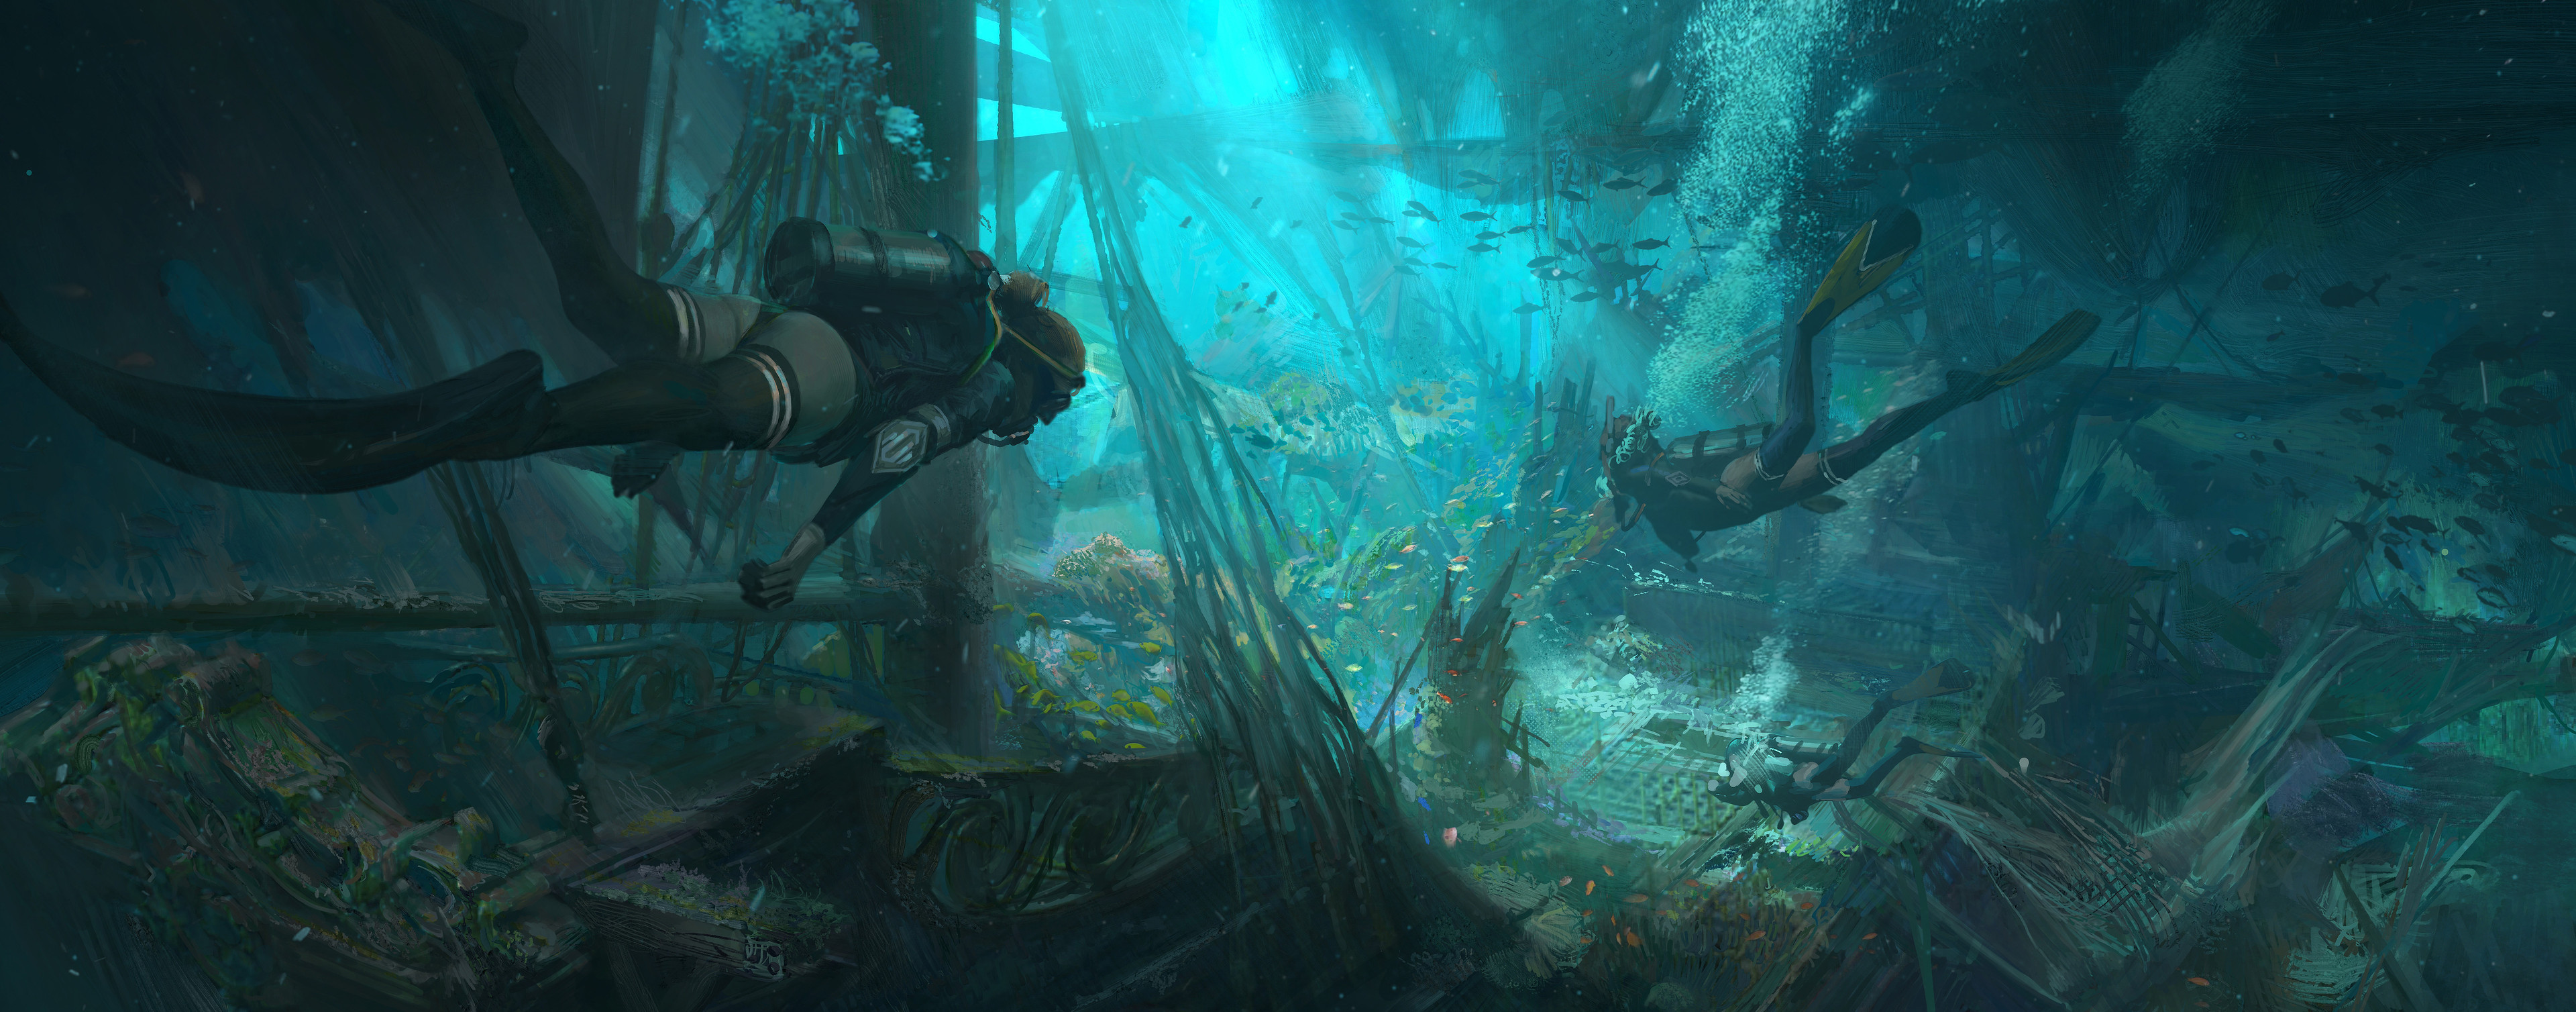 General 3840x1508 digital art artwork illustration drawing underwater scuba diving environment ruins ship fish animals water swimming